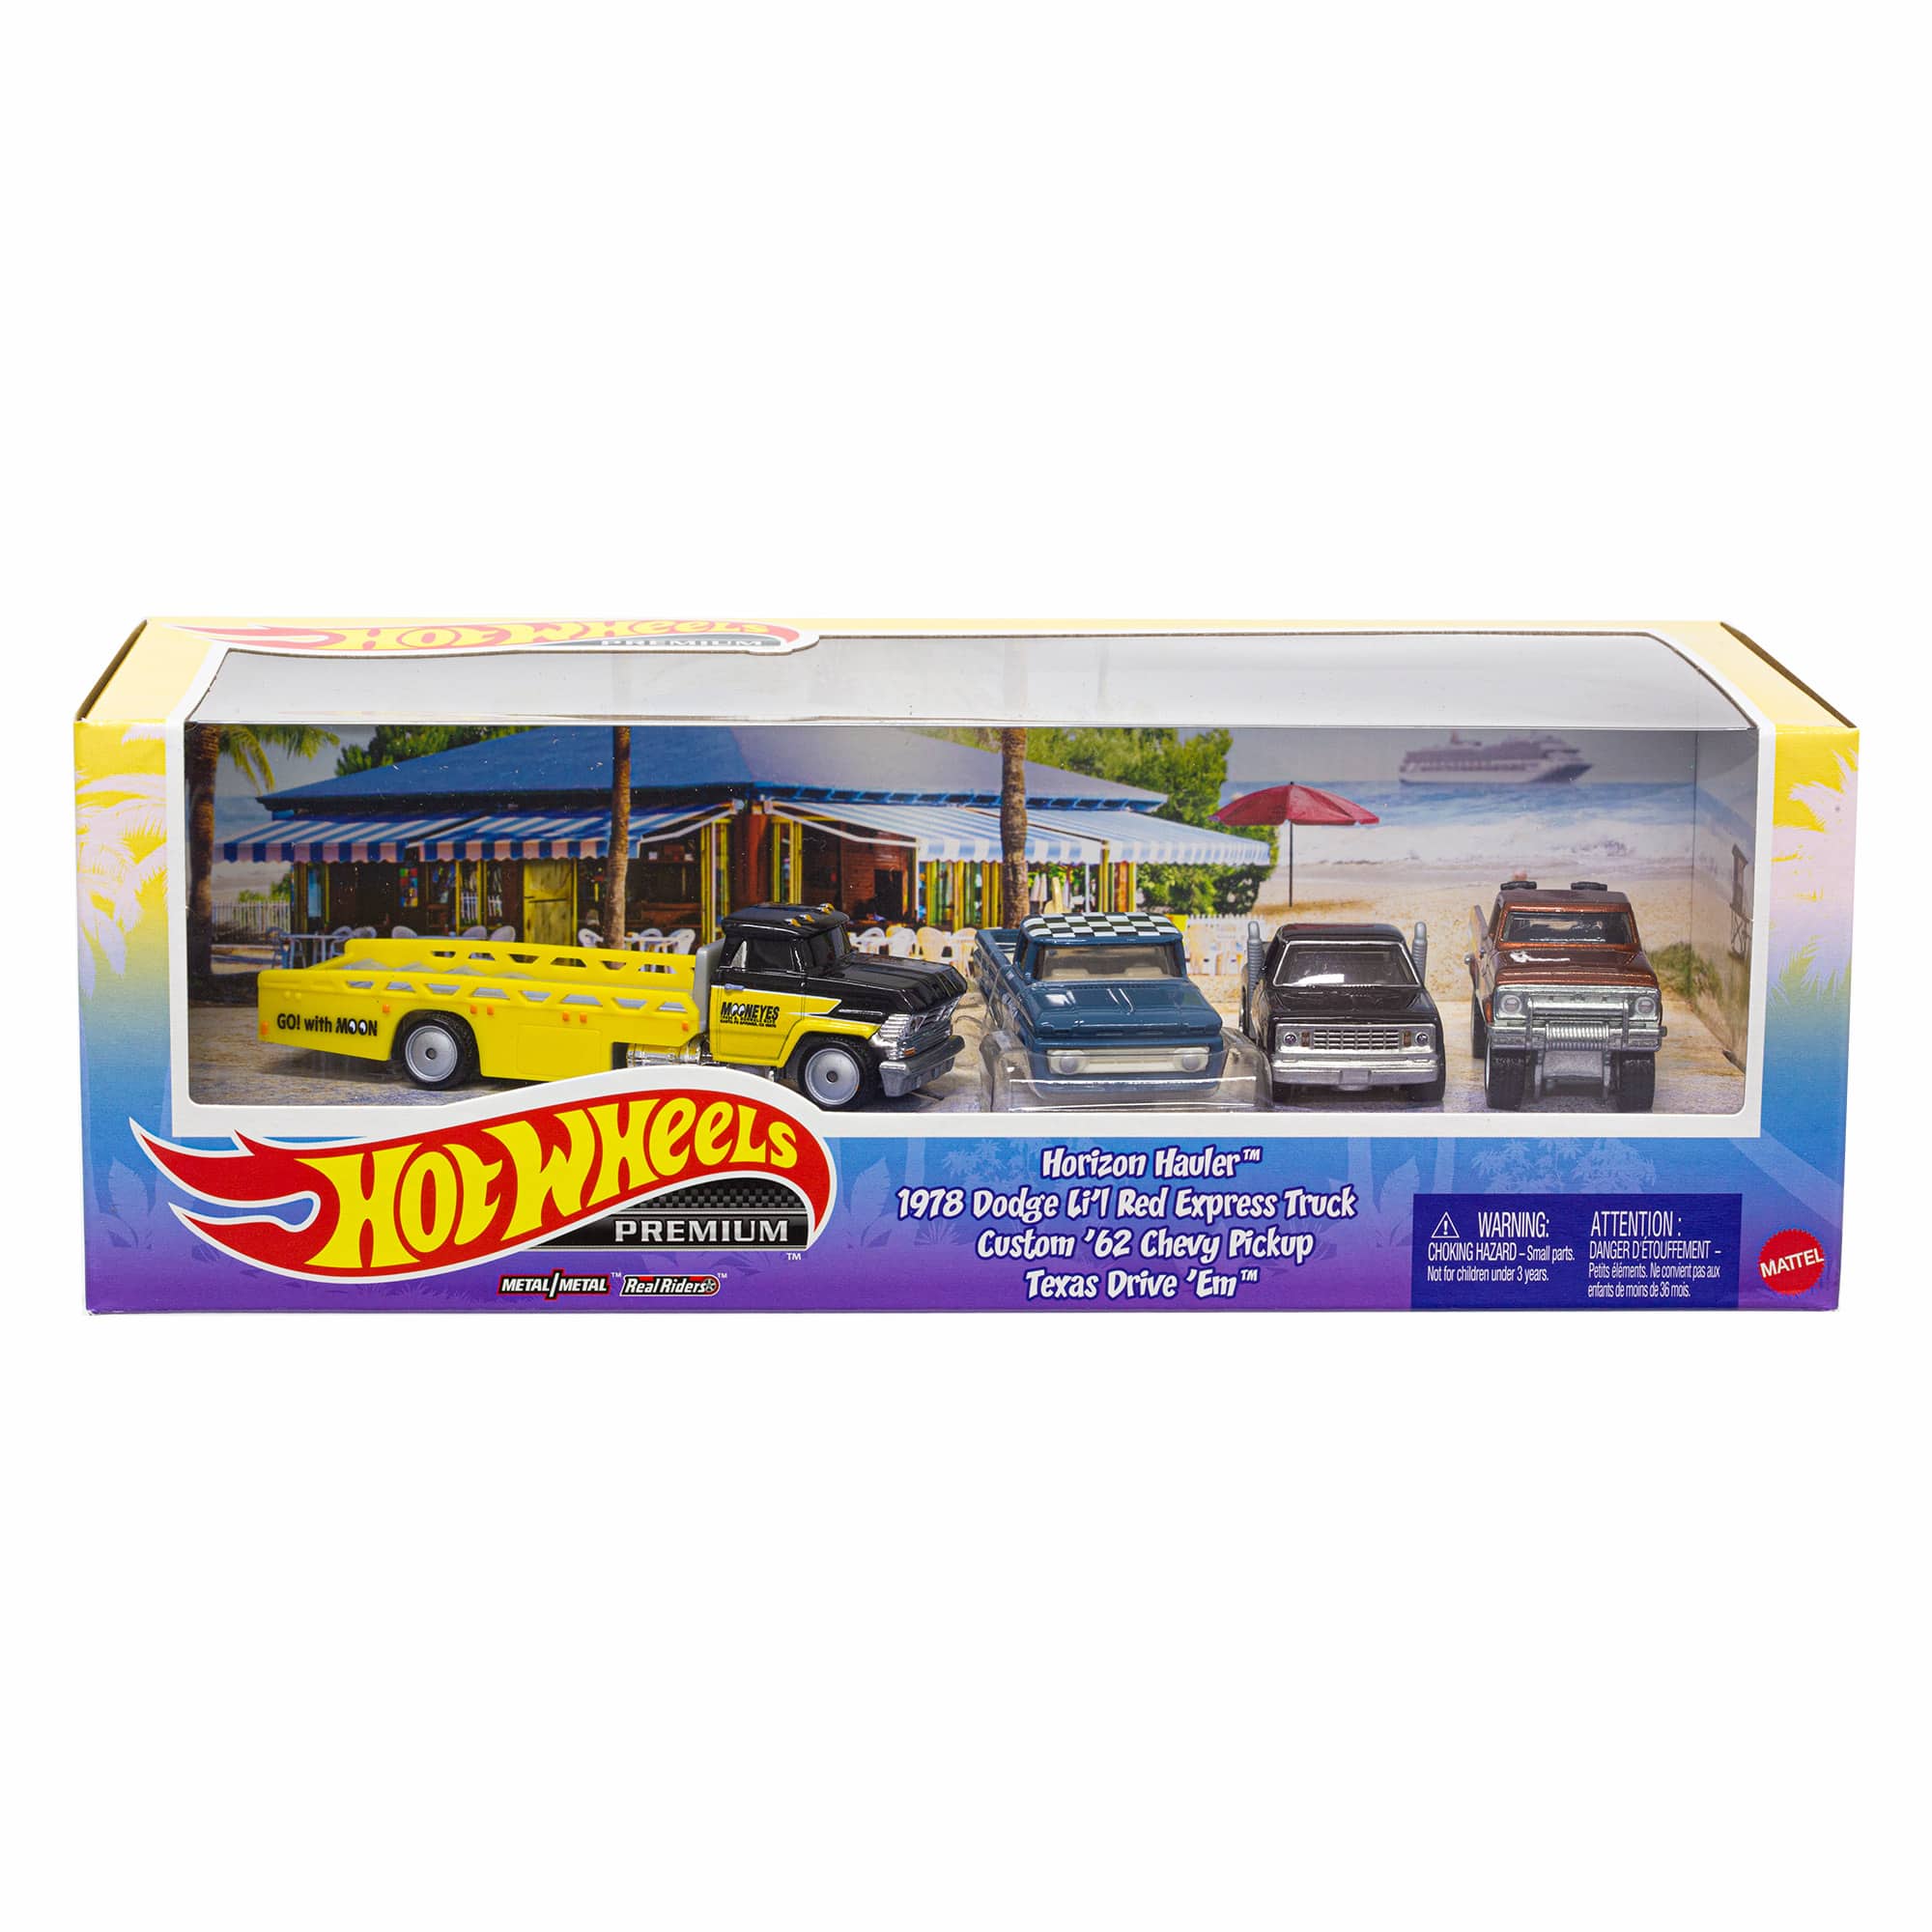 Melbourne PTV Bus Custom LEGO Model